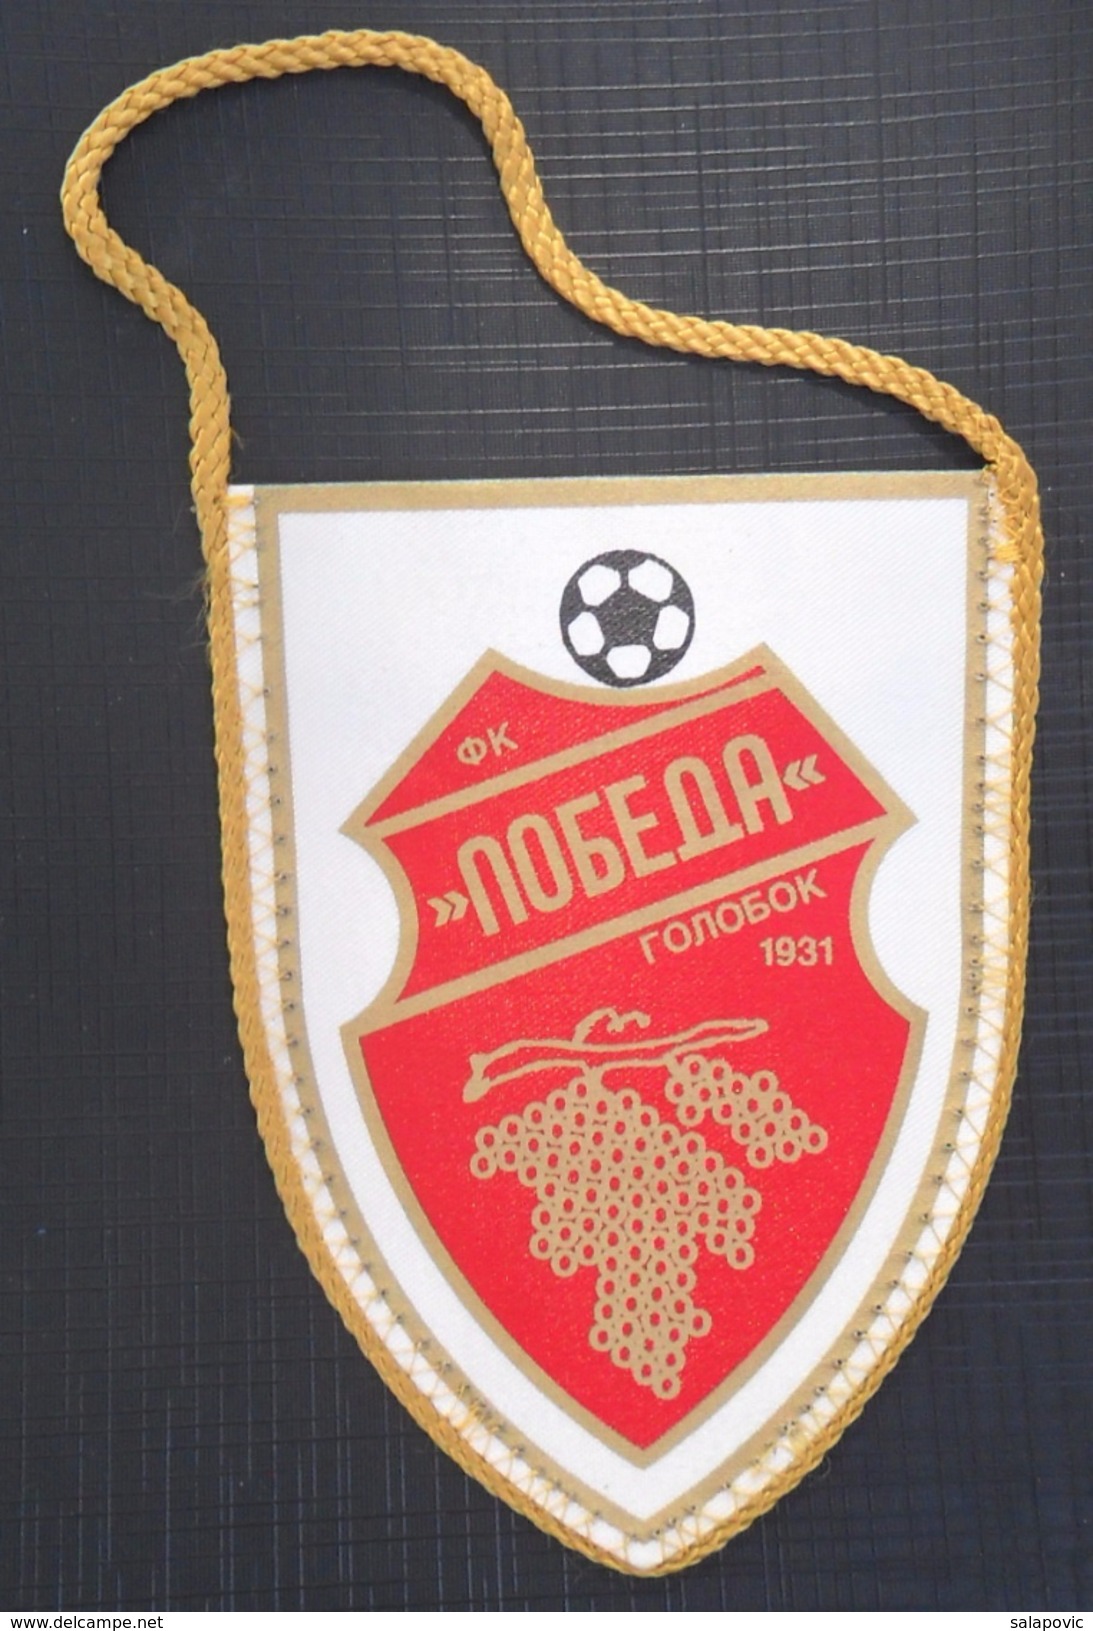 FK Pobeda Golobok, SERBIA FOOTBALL CLUB, CALCIO OLD PENNANT, SPORTS FLAG - Uniformes Recordatorios & Misc